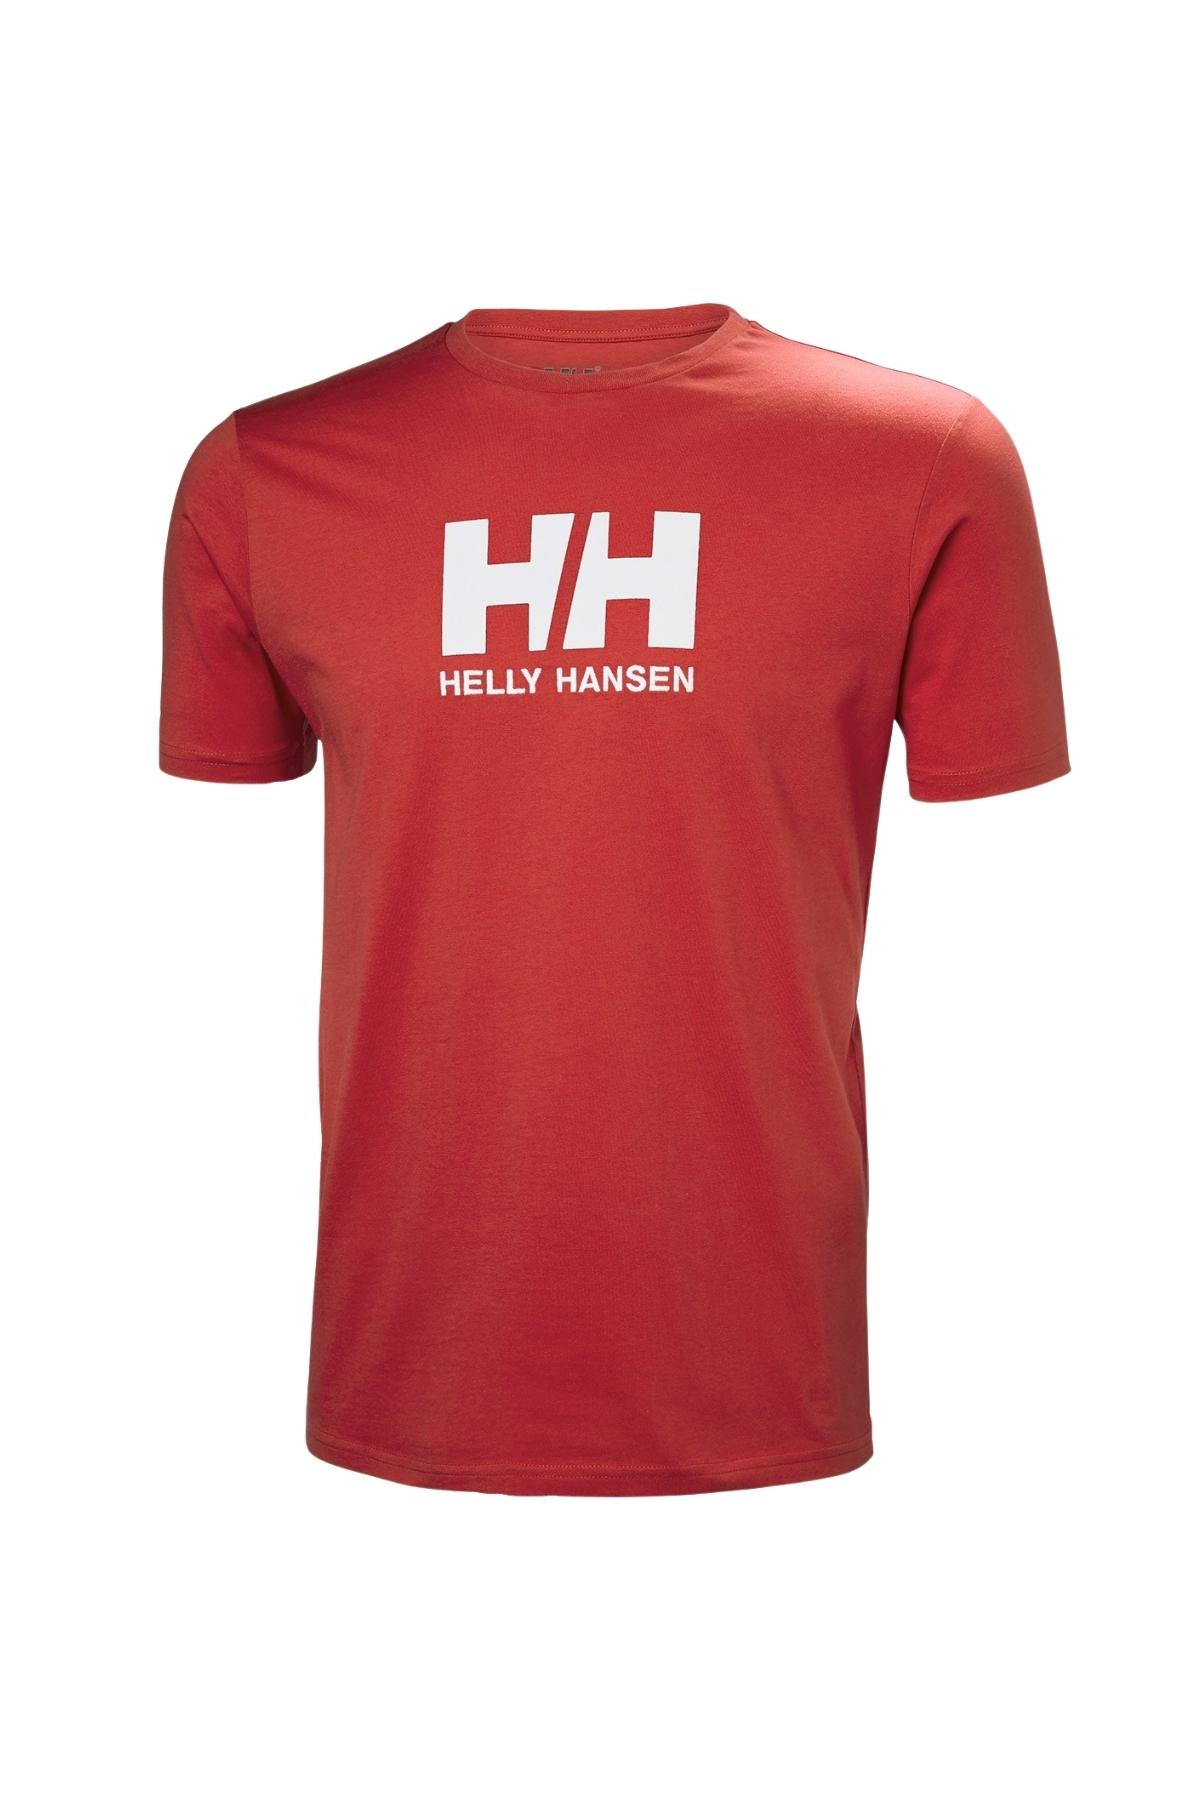 Helly Hansen HHA.33979 - HH Logo Erkek Bordo T-Shirt